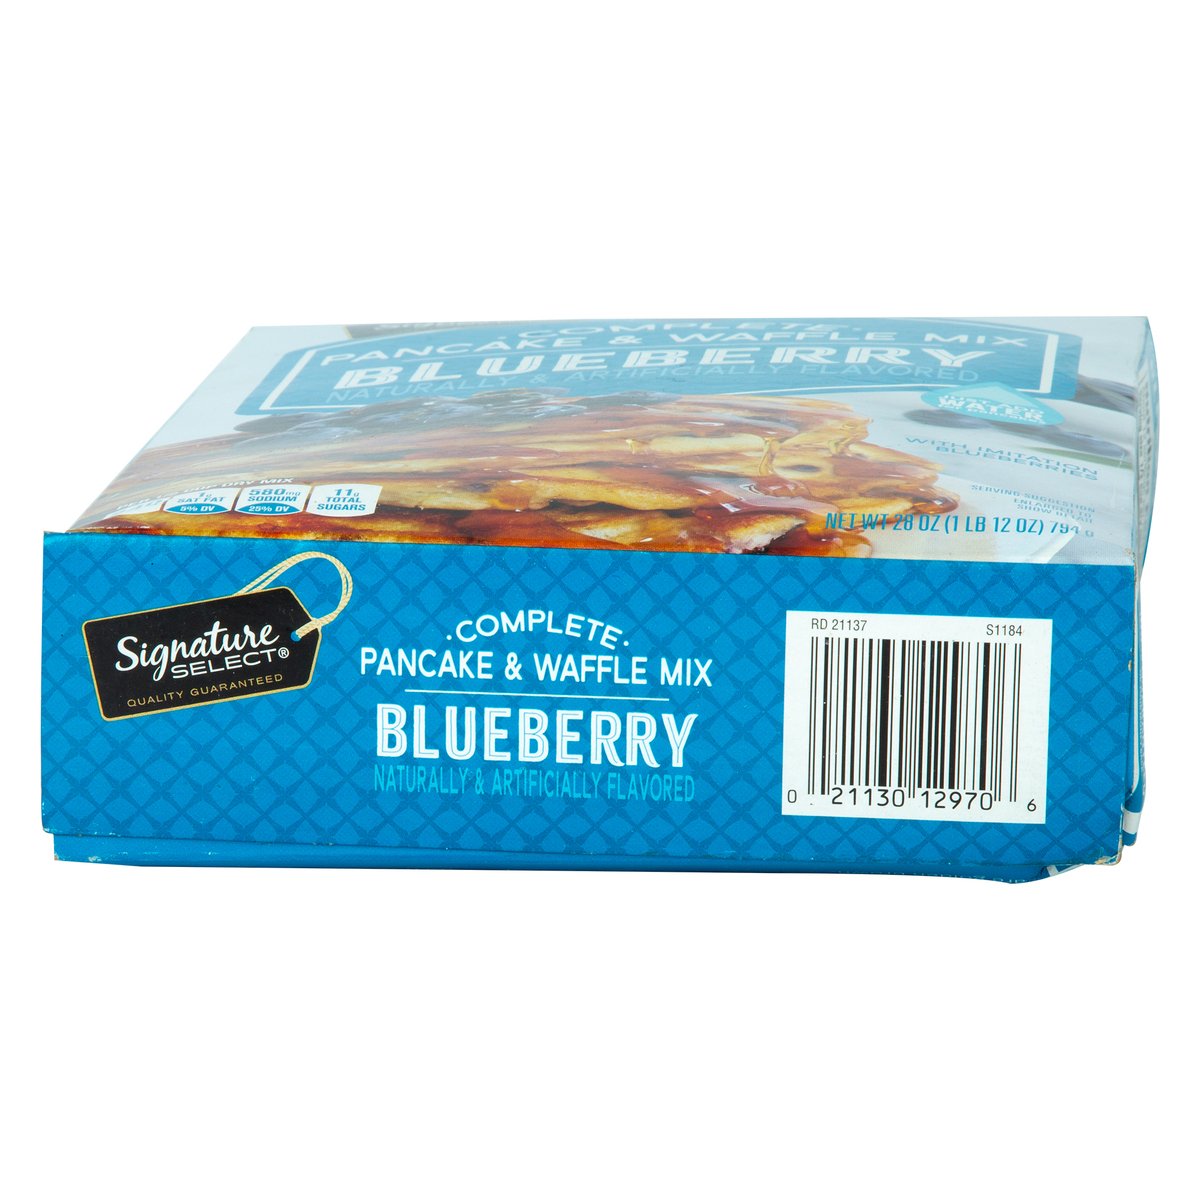 Signature Select Blueberry Pancake & Waffle Mix 794 g